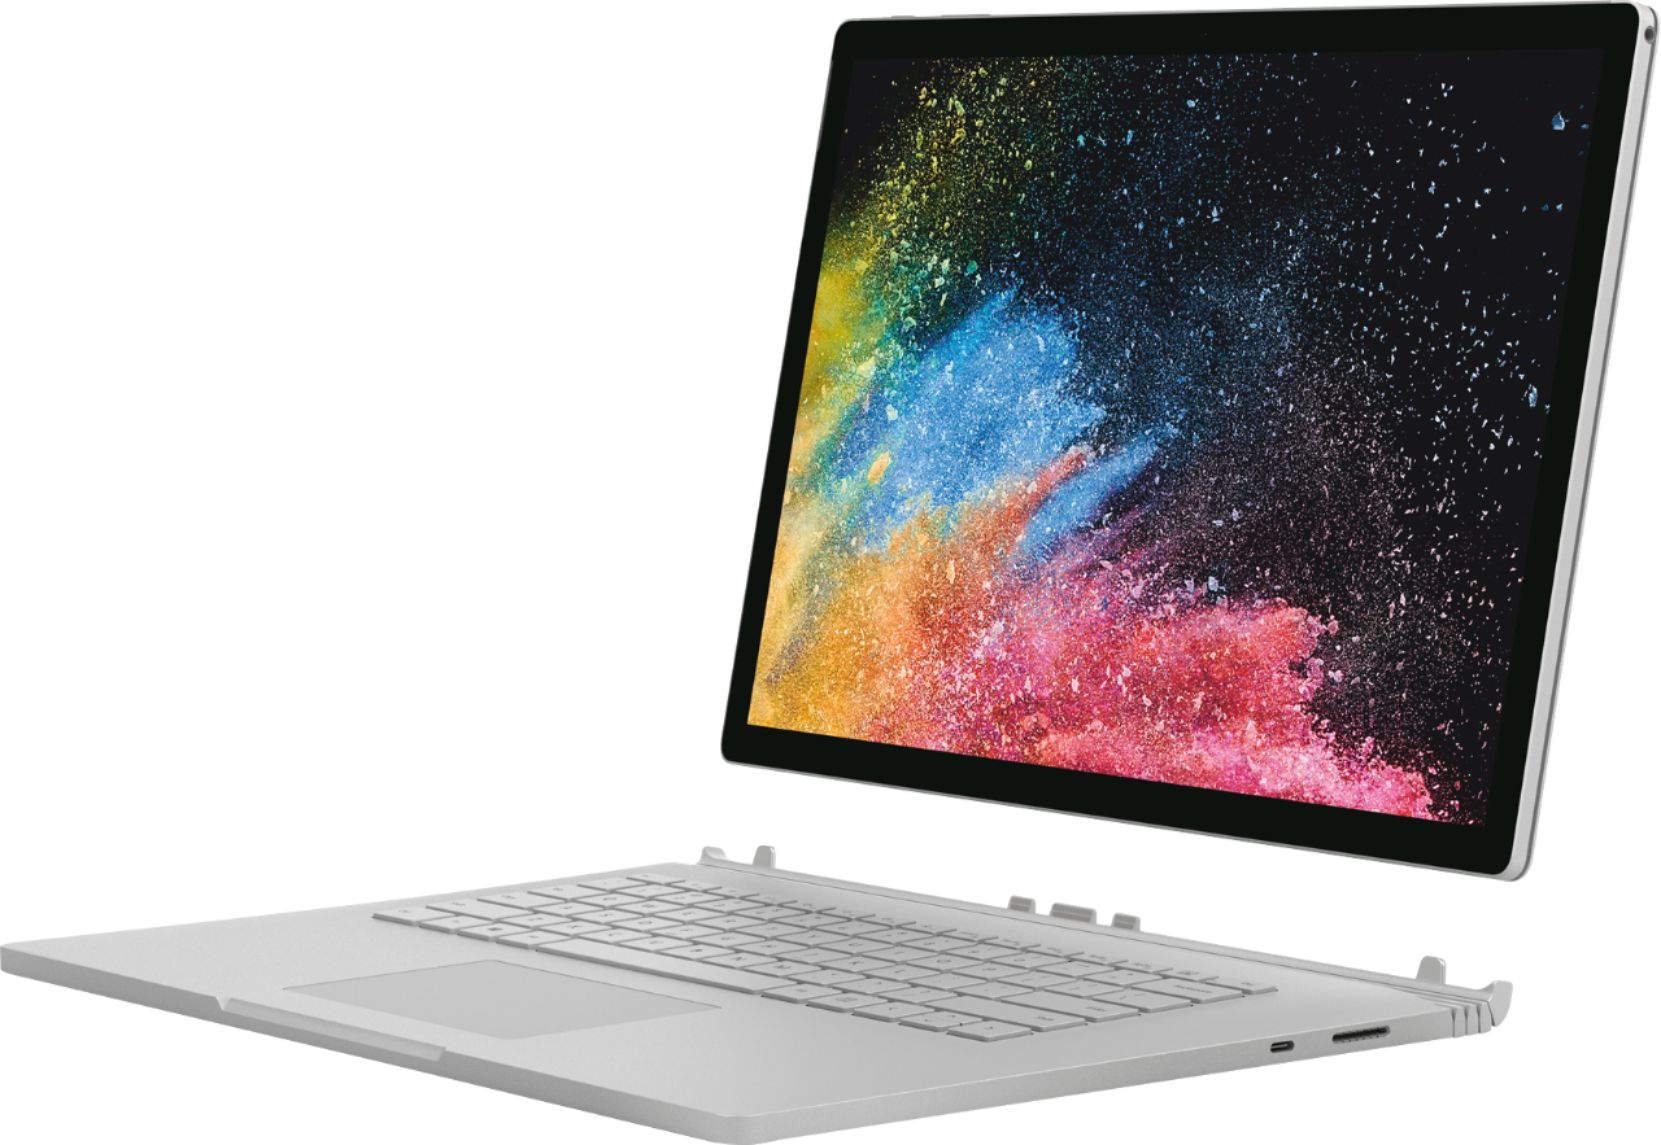 Angle View: Microsoft - Geek Squad Certified Refurbished Surface Book 3 - Intel Core i7 - 32GB - NVIDIA GeForce GTX 1650 Max-Q - 512GB SSD - Platinum